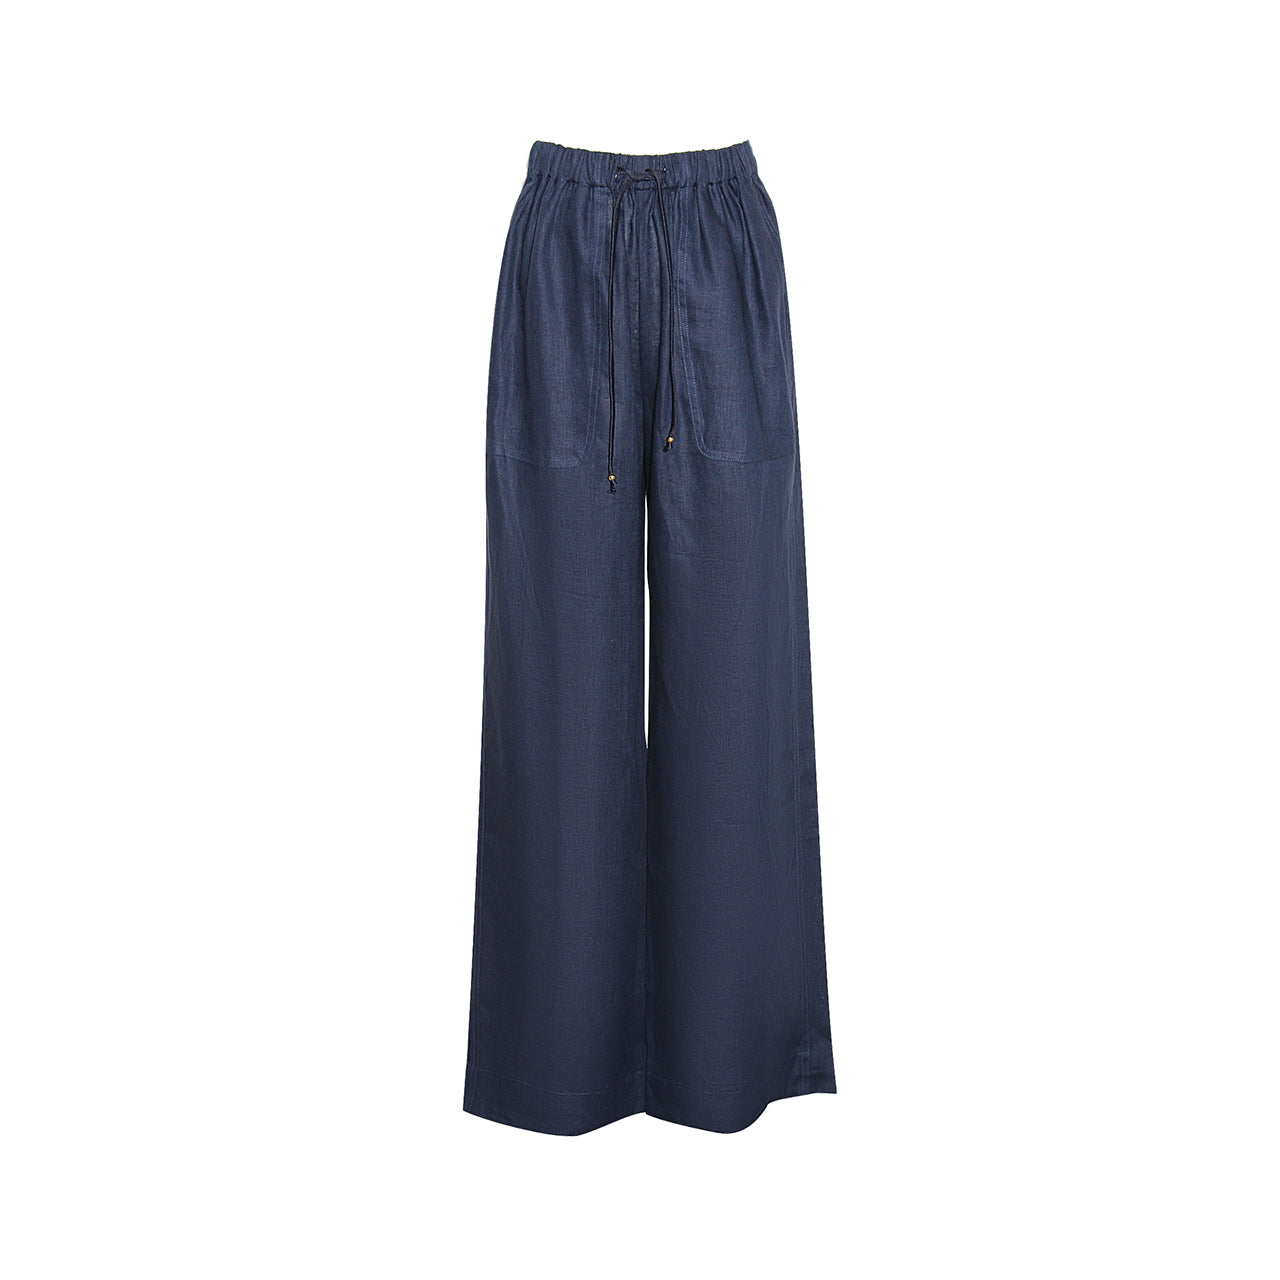 Stylish Navy Blue Linen Pants by Gosia Orlowska